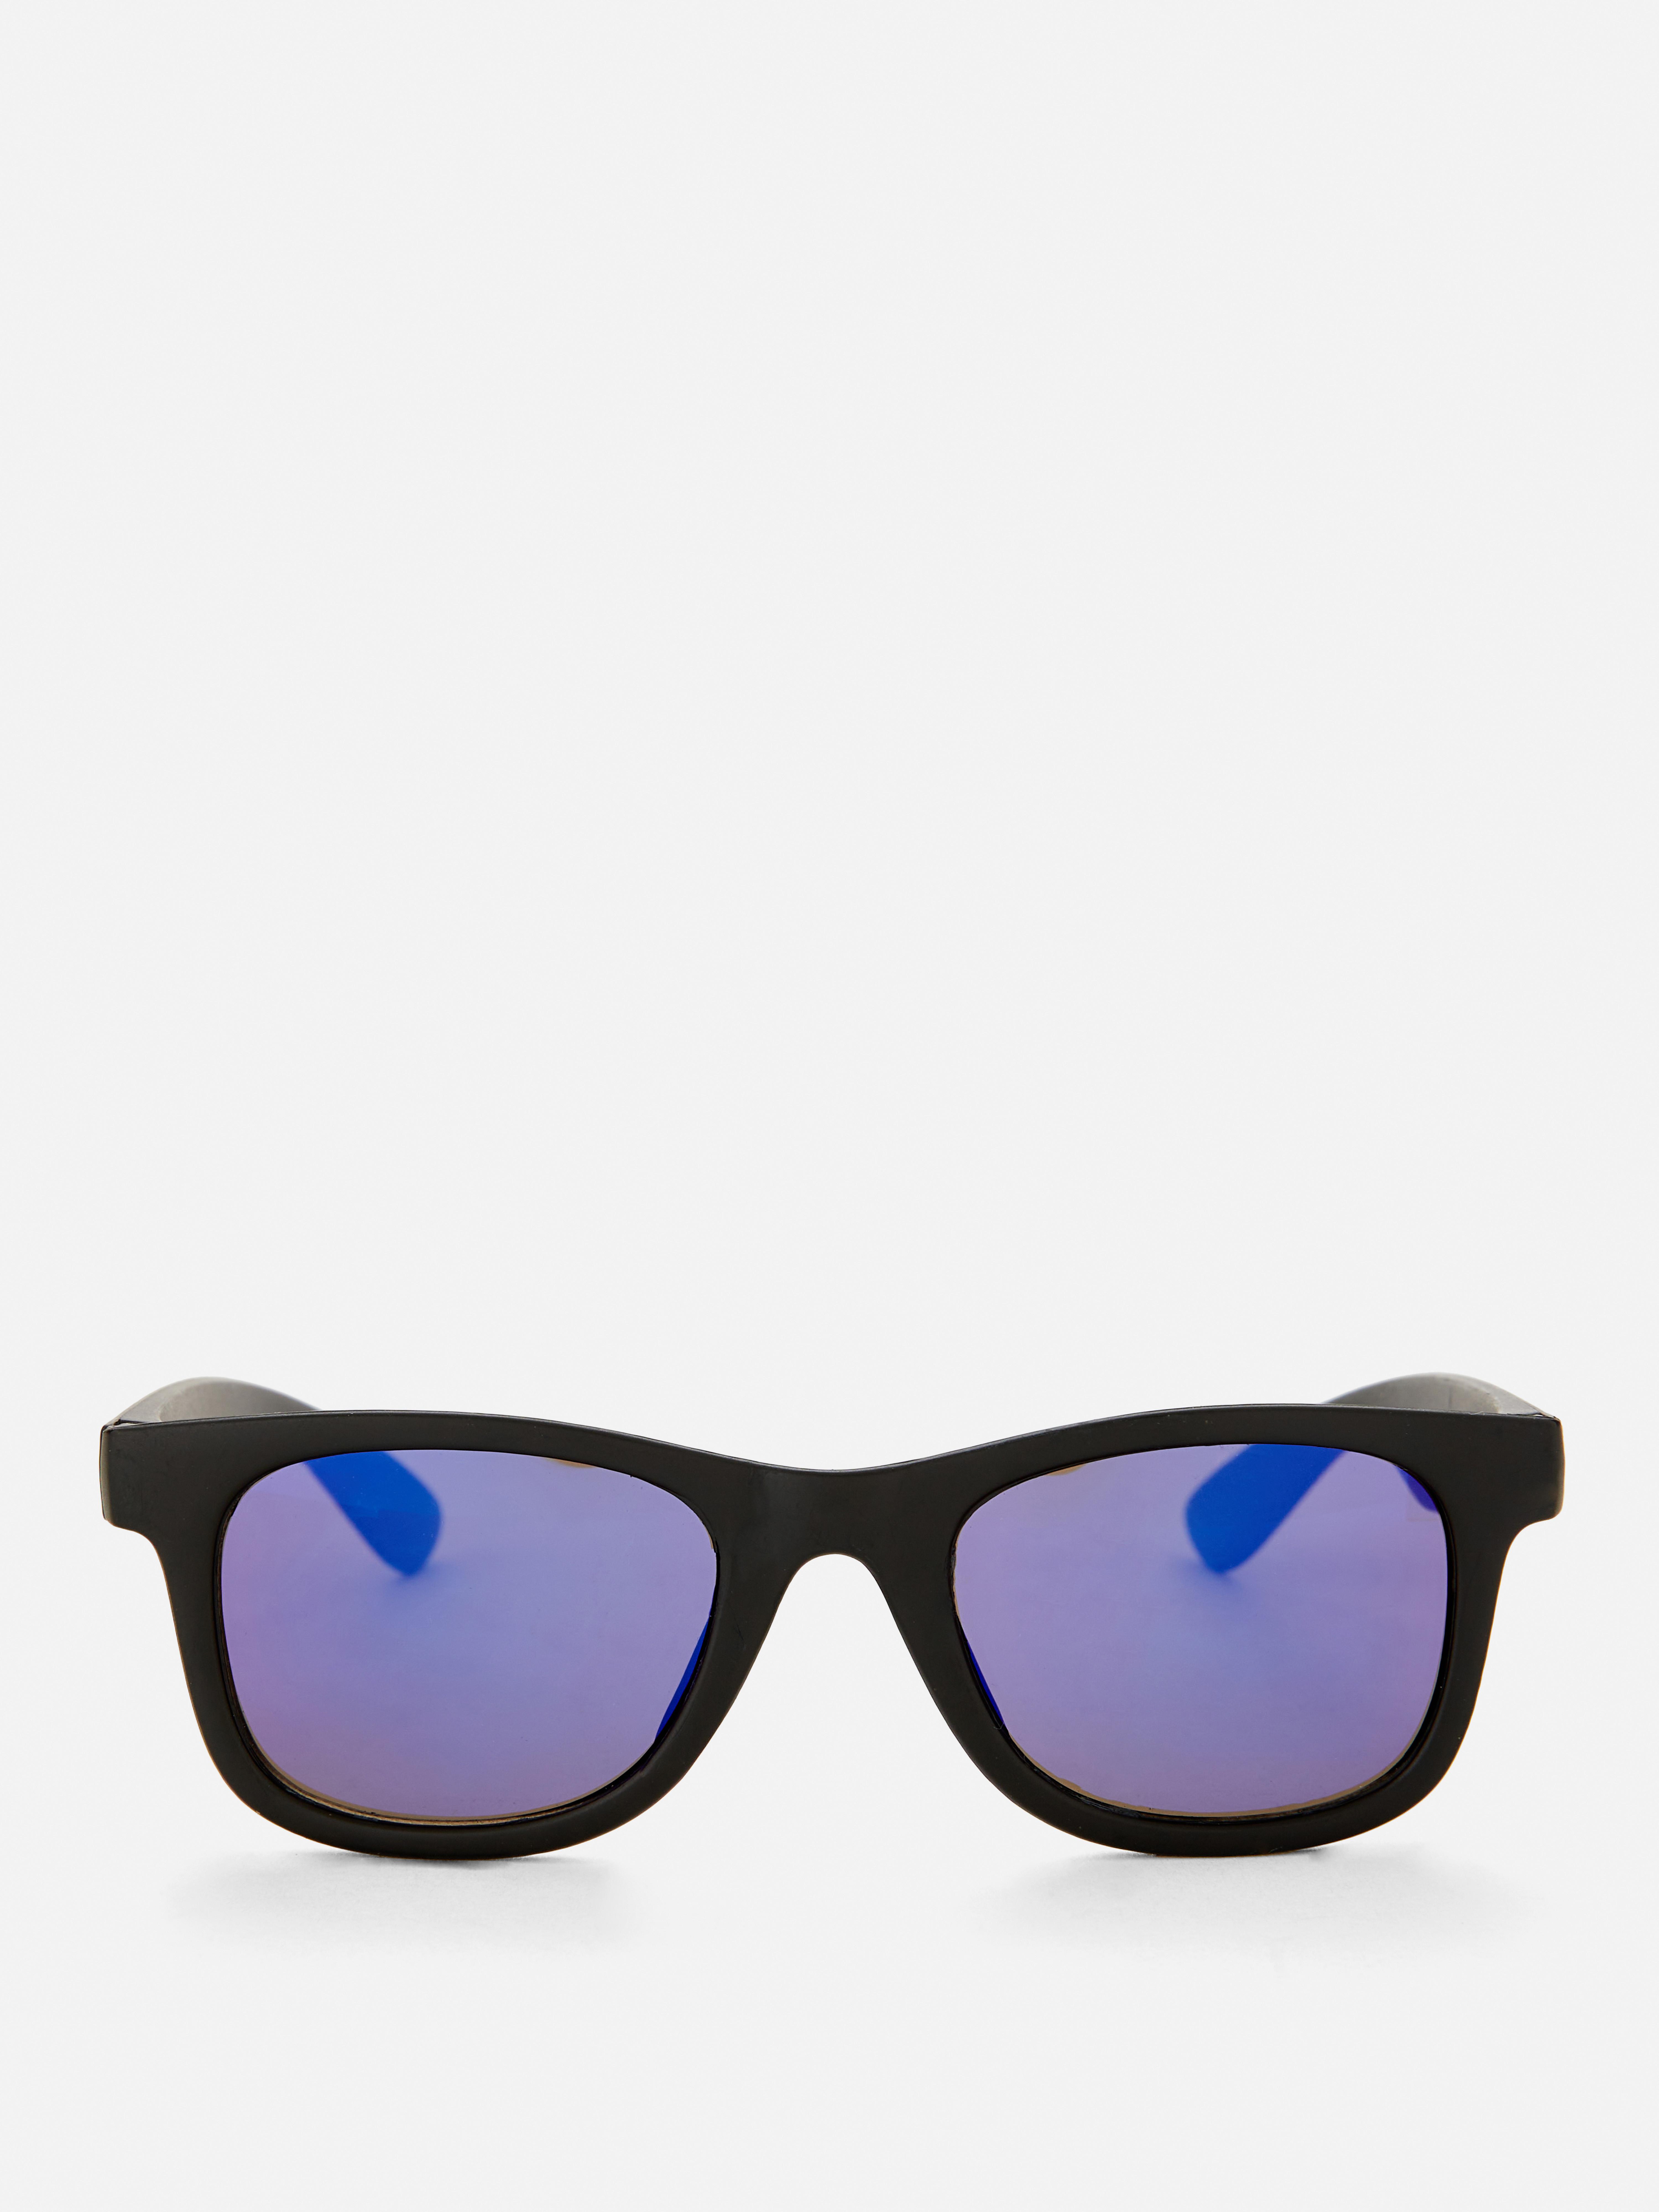 Wayfarer Patterned Sunglasses